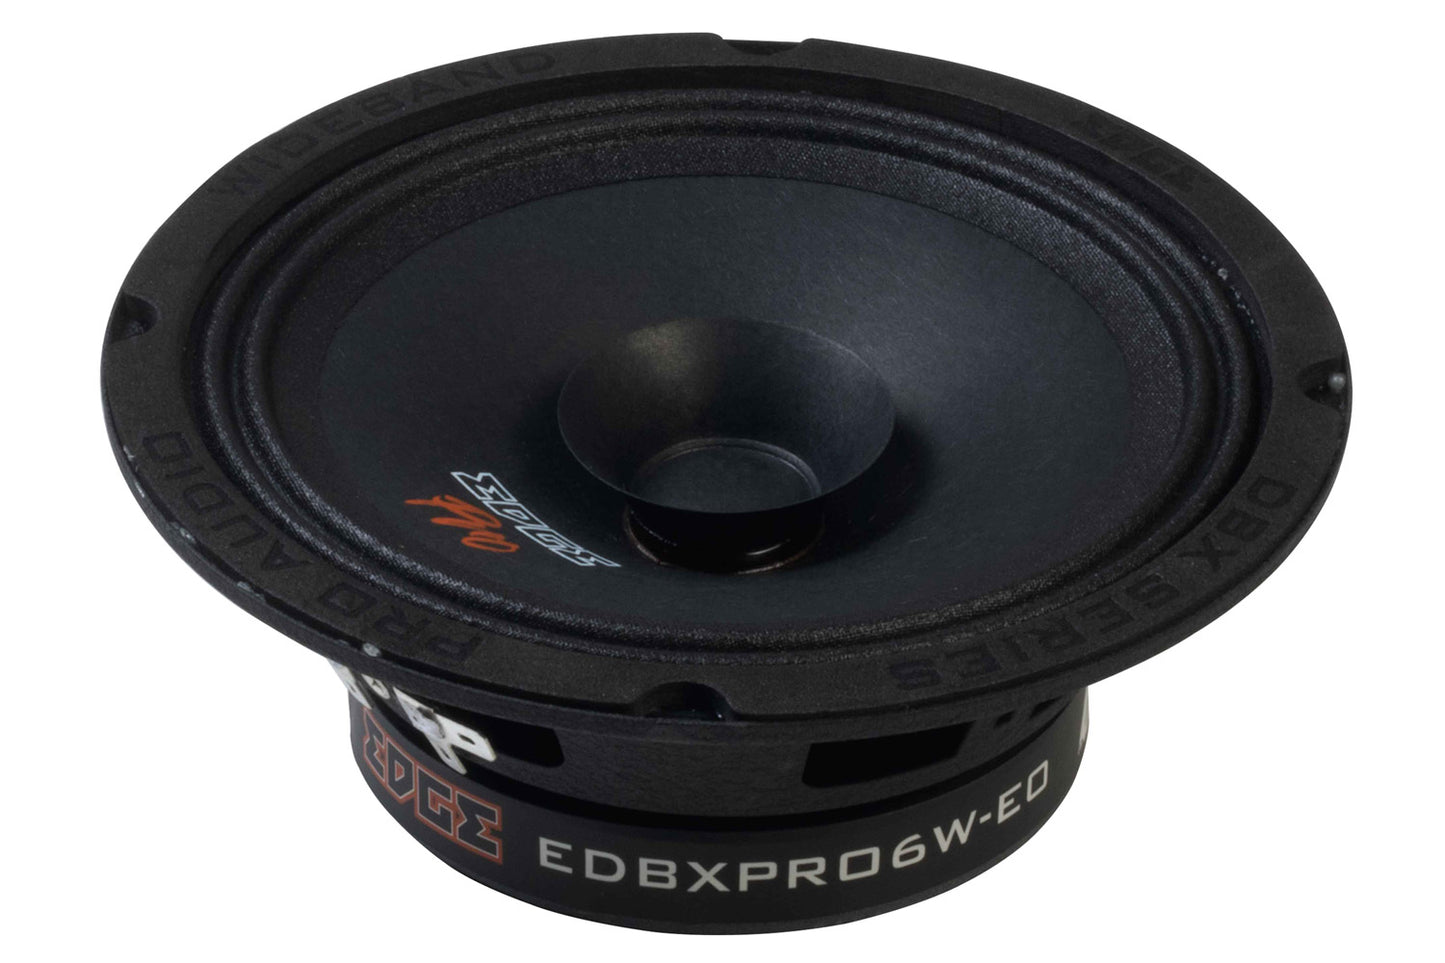 EDBXPRO6W-E0 | EDGE DBX Series 6 inch 300 watts Pro Audio Midrange Speakers - Pair